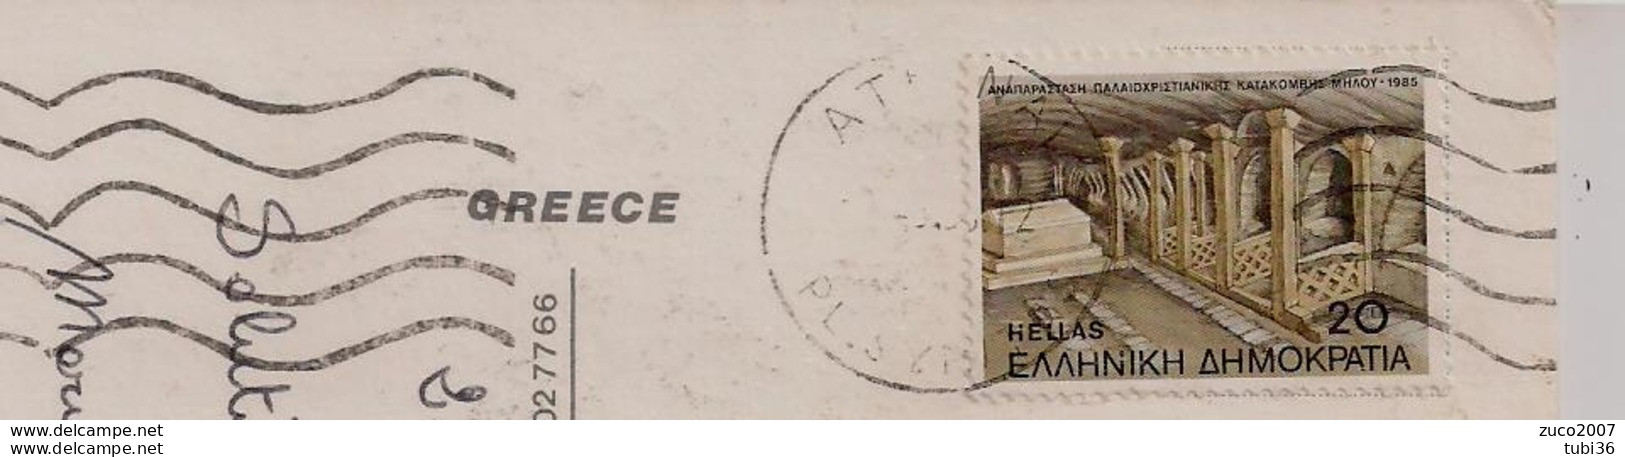 GRECIA - CATACOMBE 20 - 1985 - CARYATIDES - ITALIA - Covers & Documents